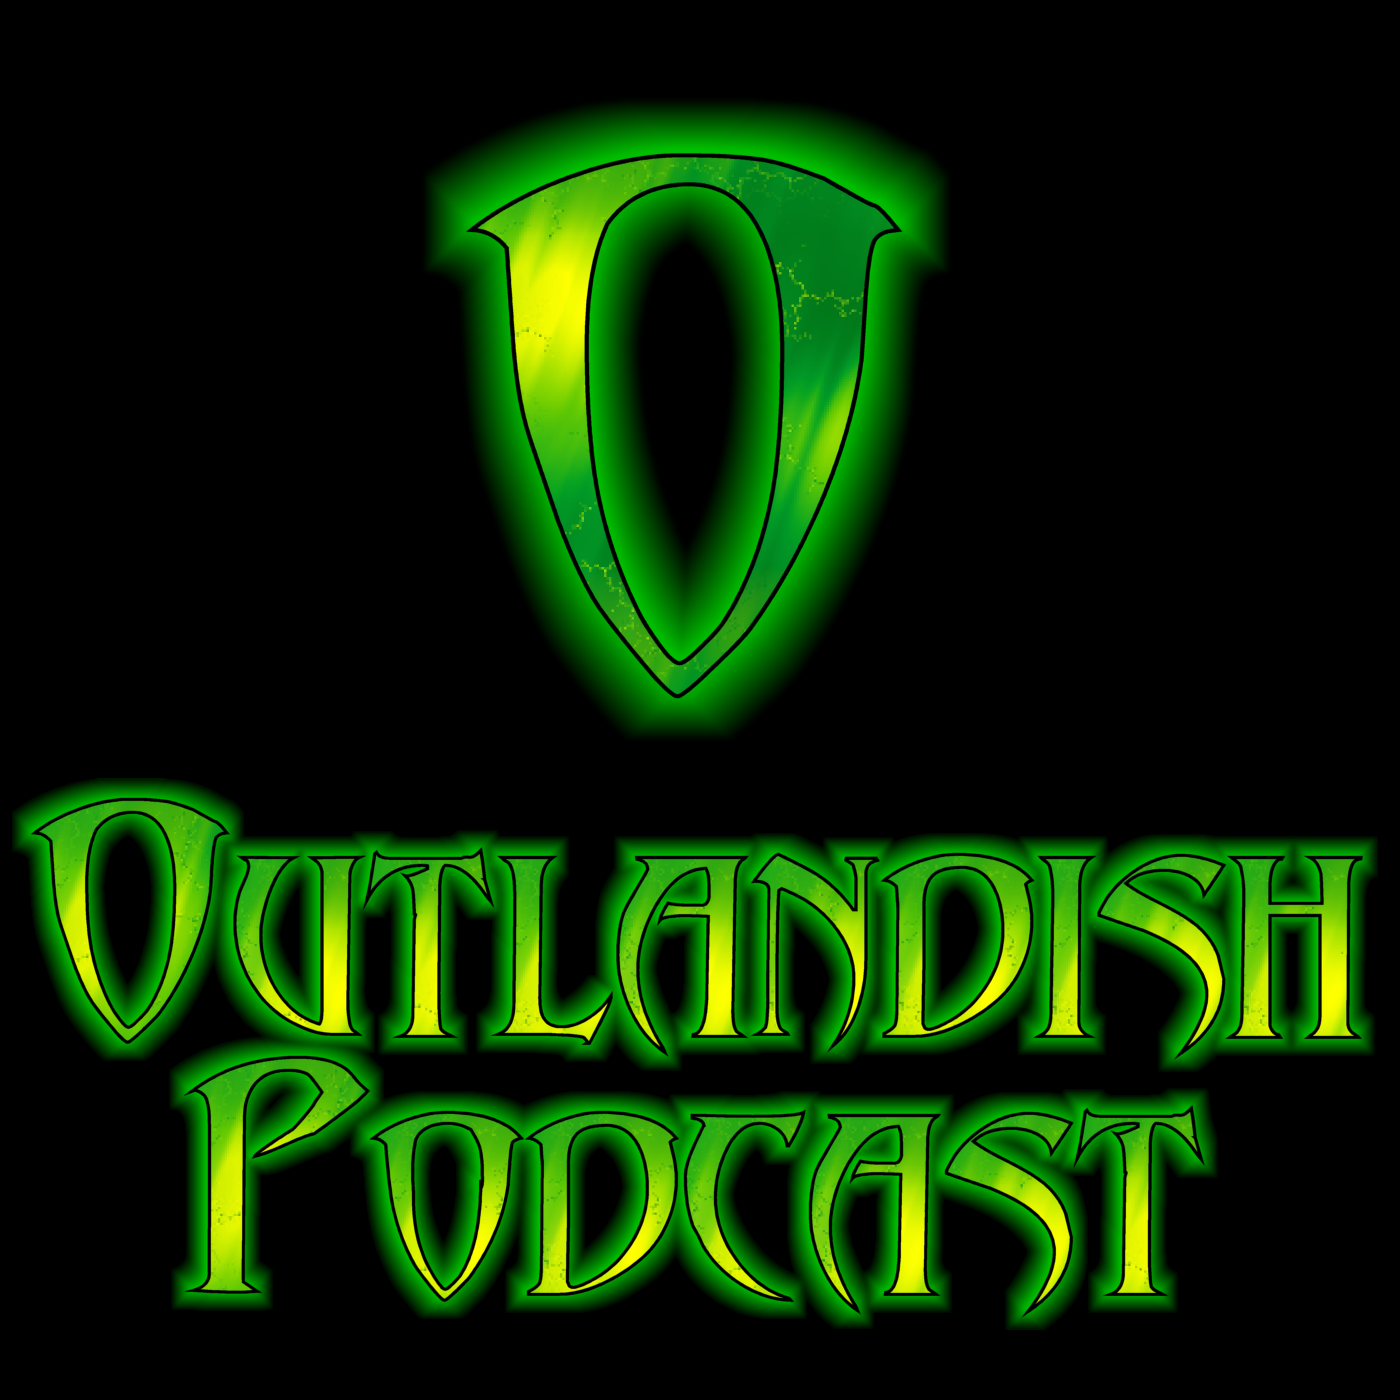 Outlandish Podcast